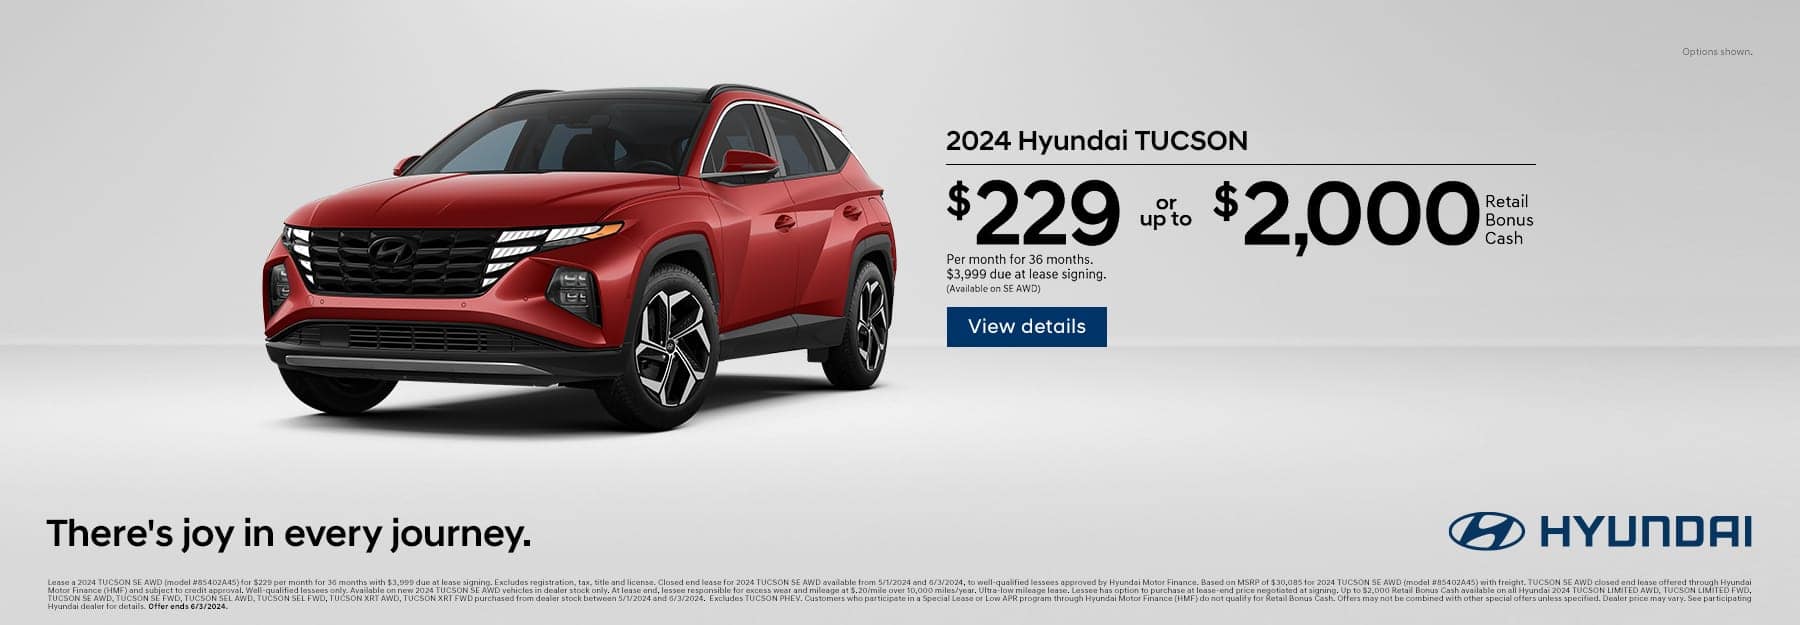 Hyundai Tucson offer